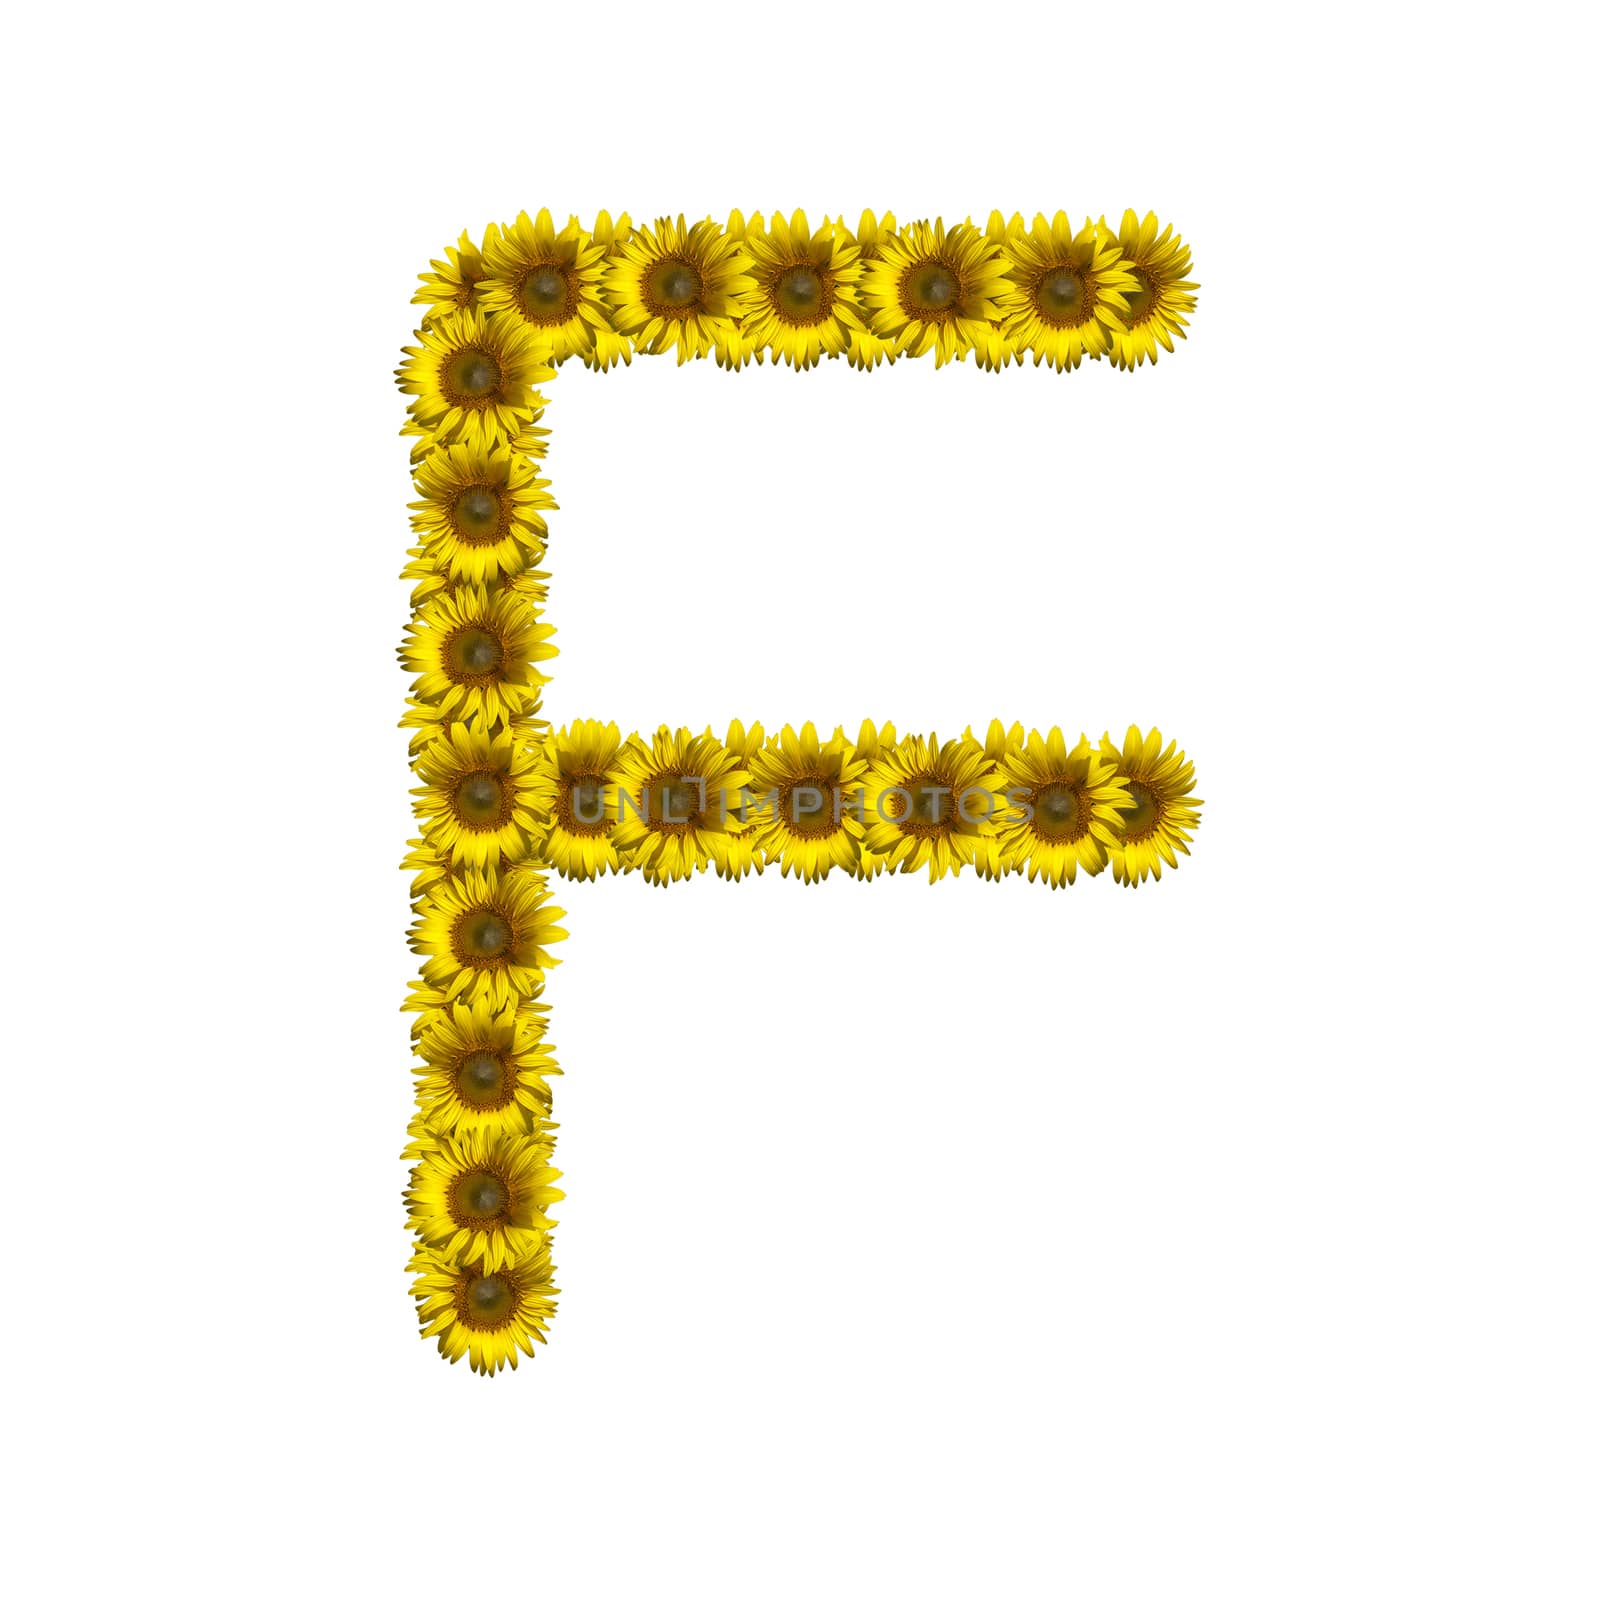 Sunflower alphabet isolated on white background, letter F